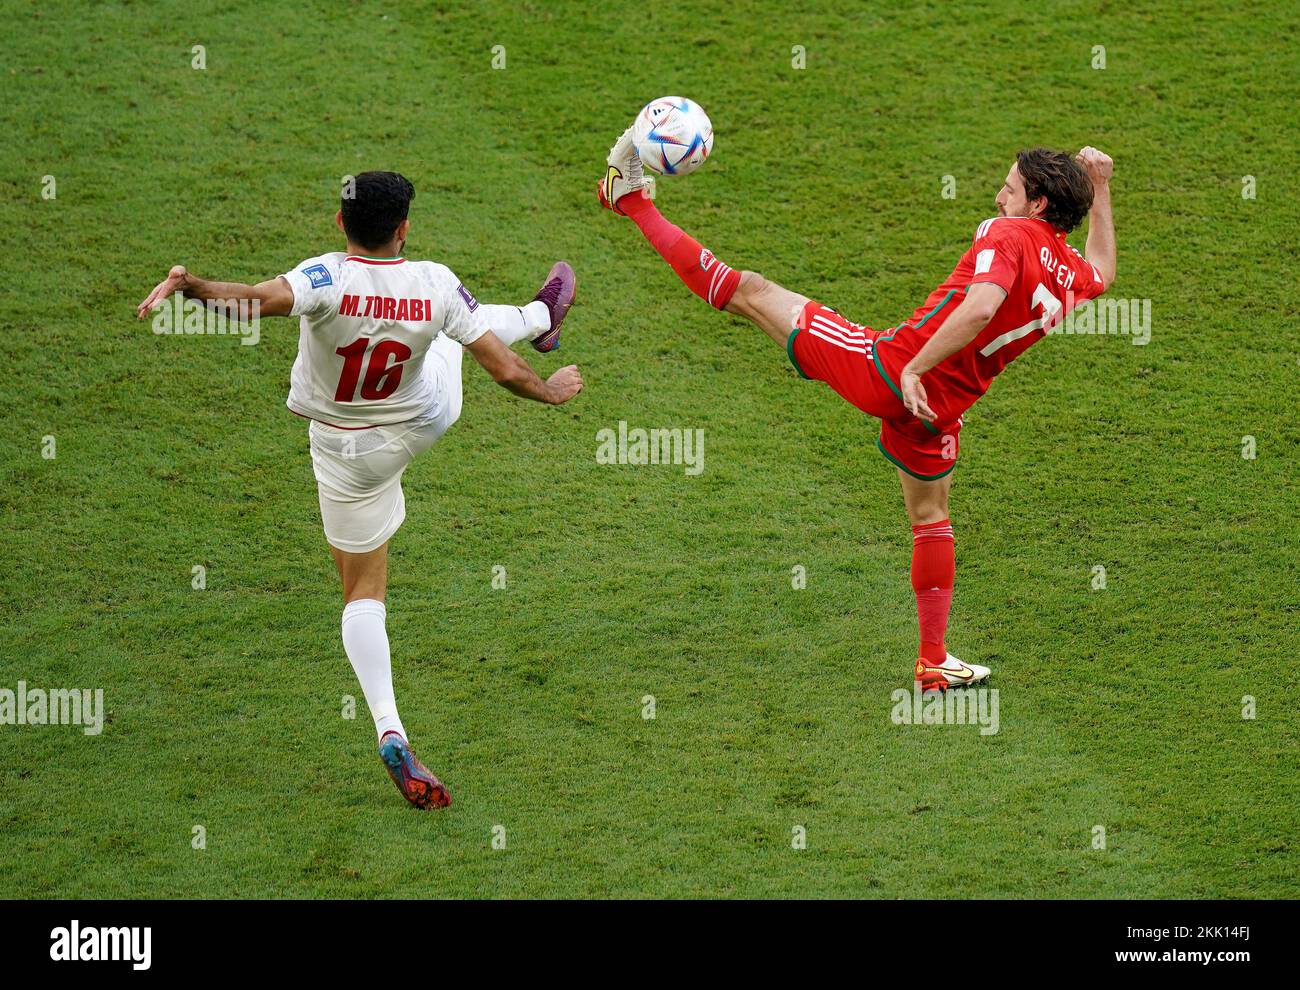 Iran's Mehdi Torabi battles with Wales’ Joe Allen during the FIFA World Cup Group B match at the Ahmad Bin Ali Stadium, Al-Rayyan. Picture date: Friday November 25, 2022. Stock Photo